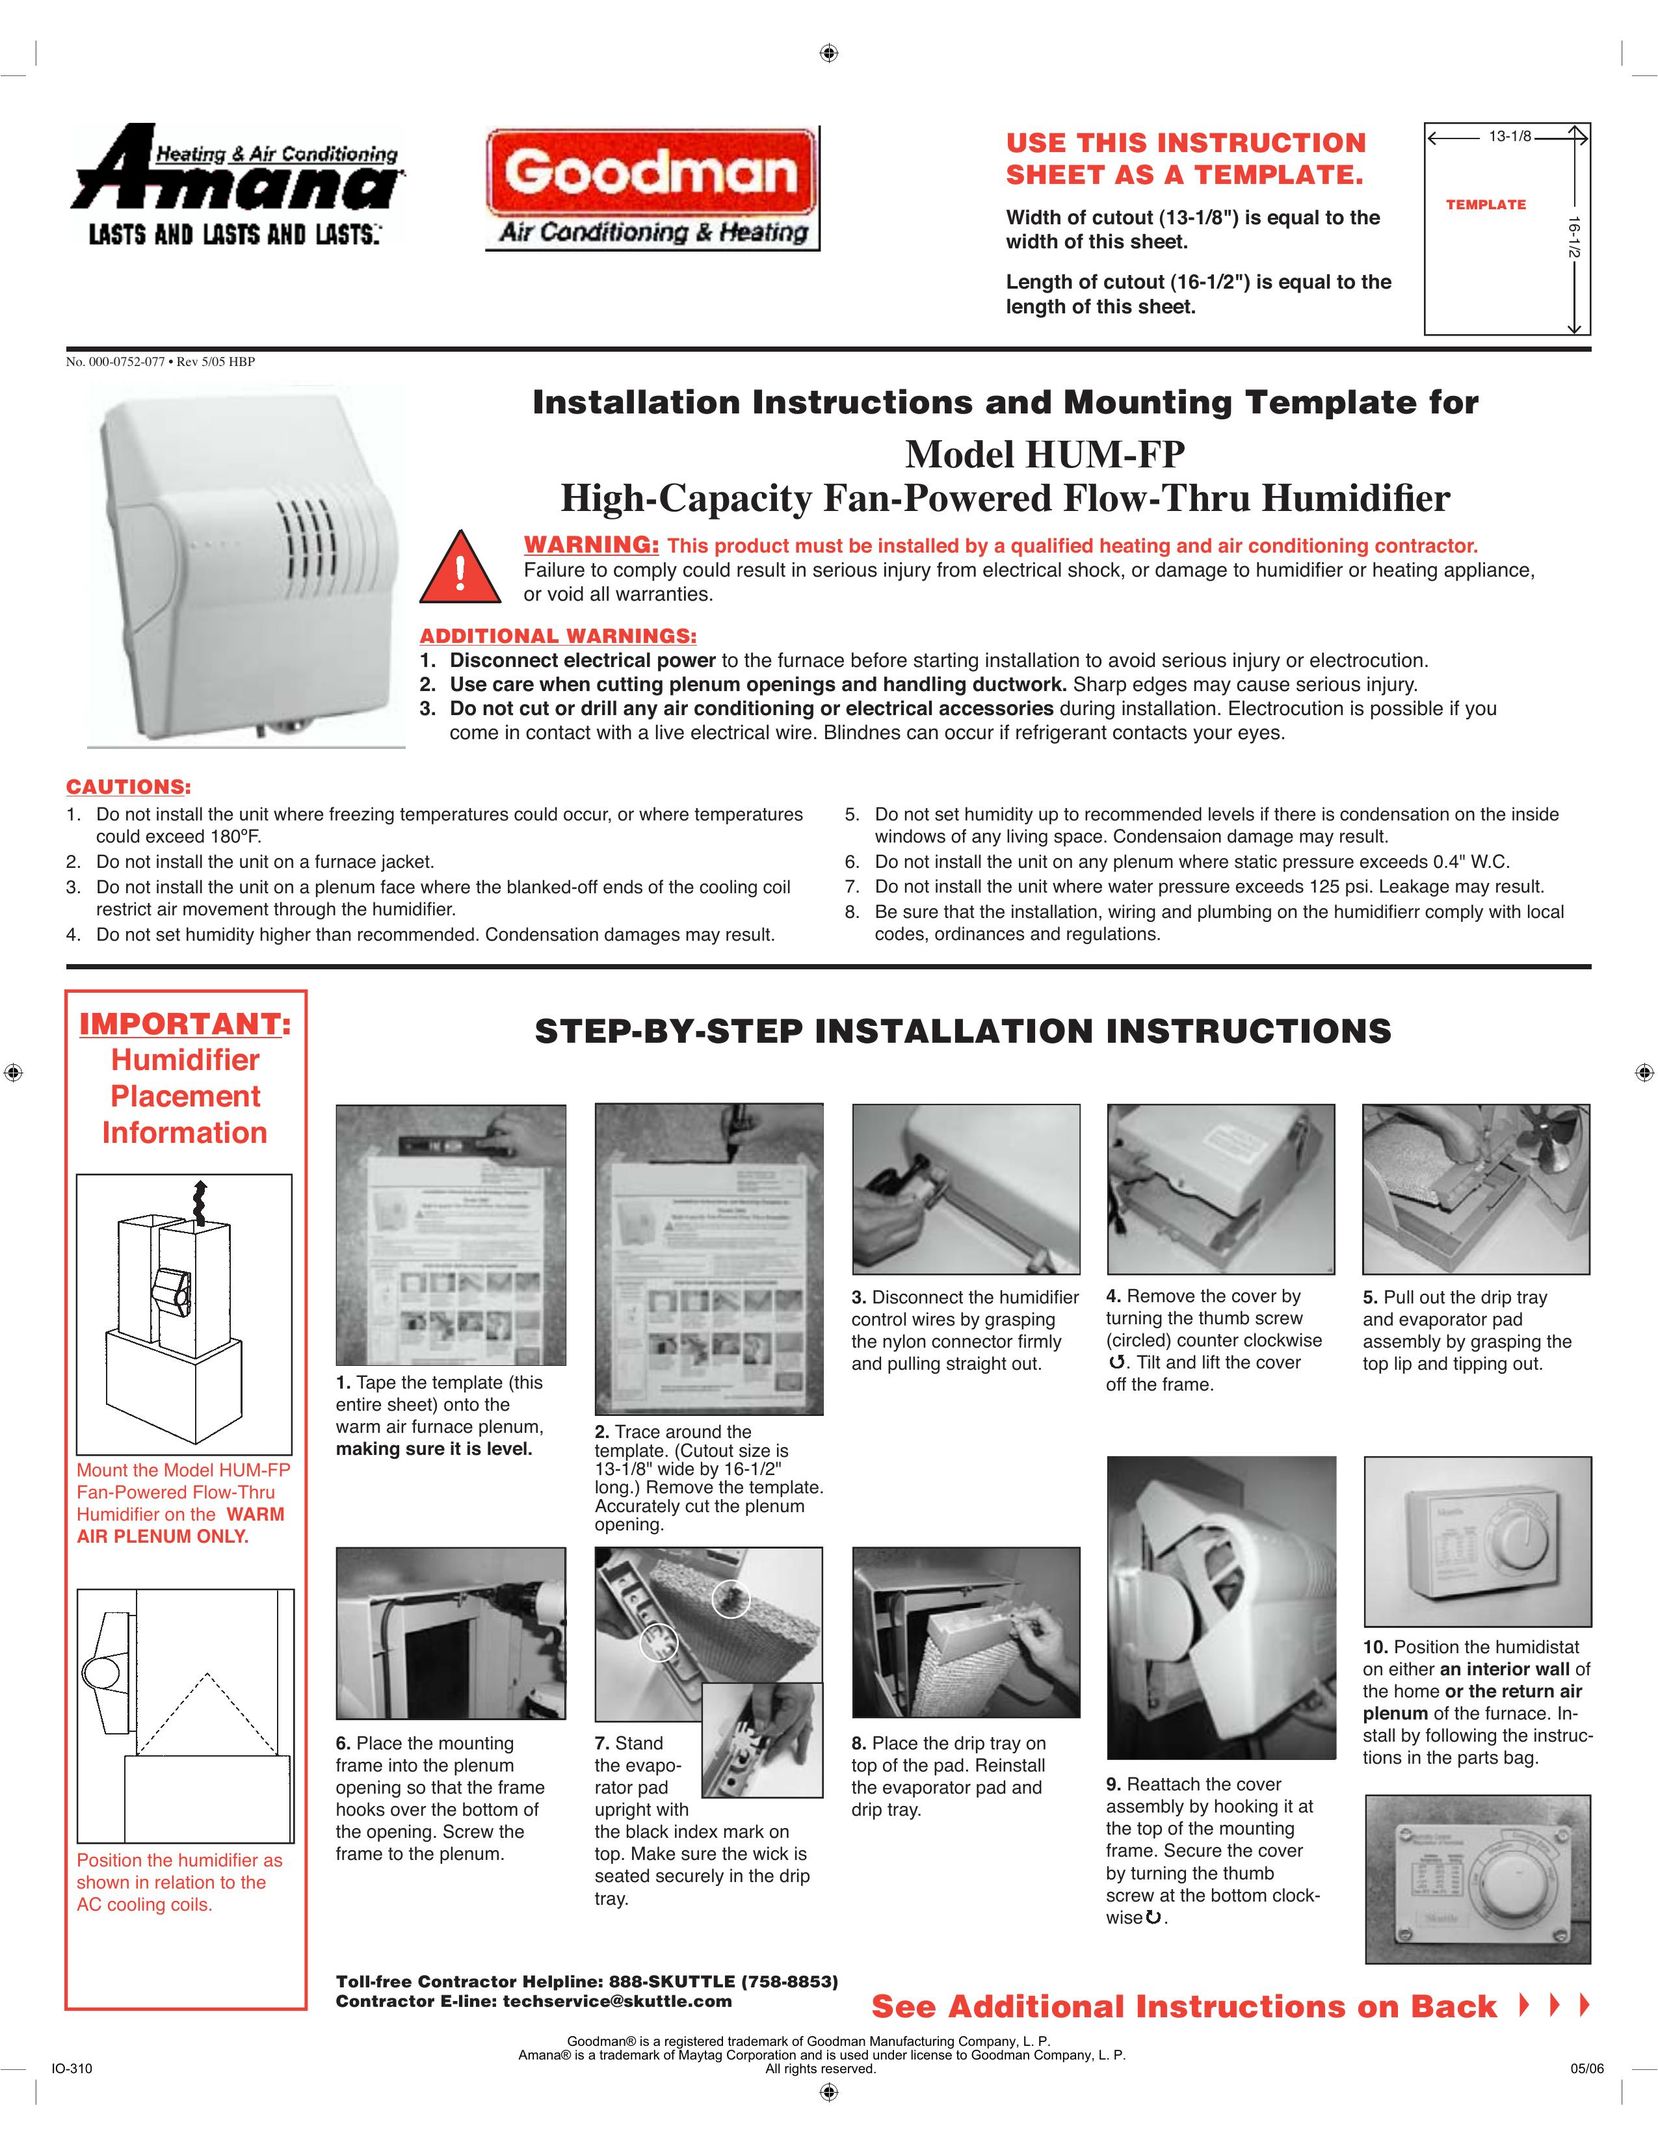 Goodman Mfg HUM-FP Humidifier User Manual